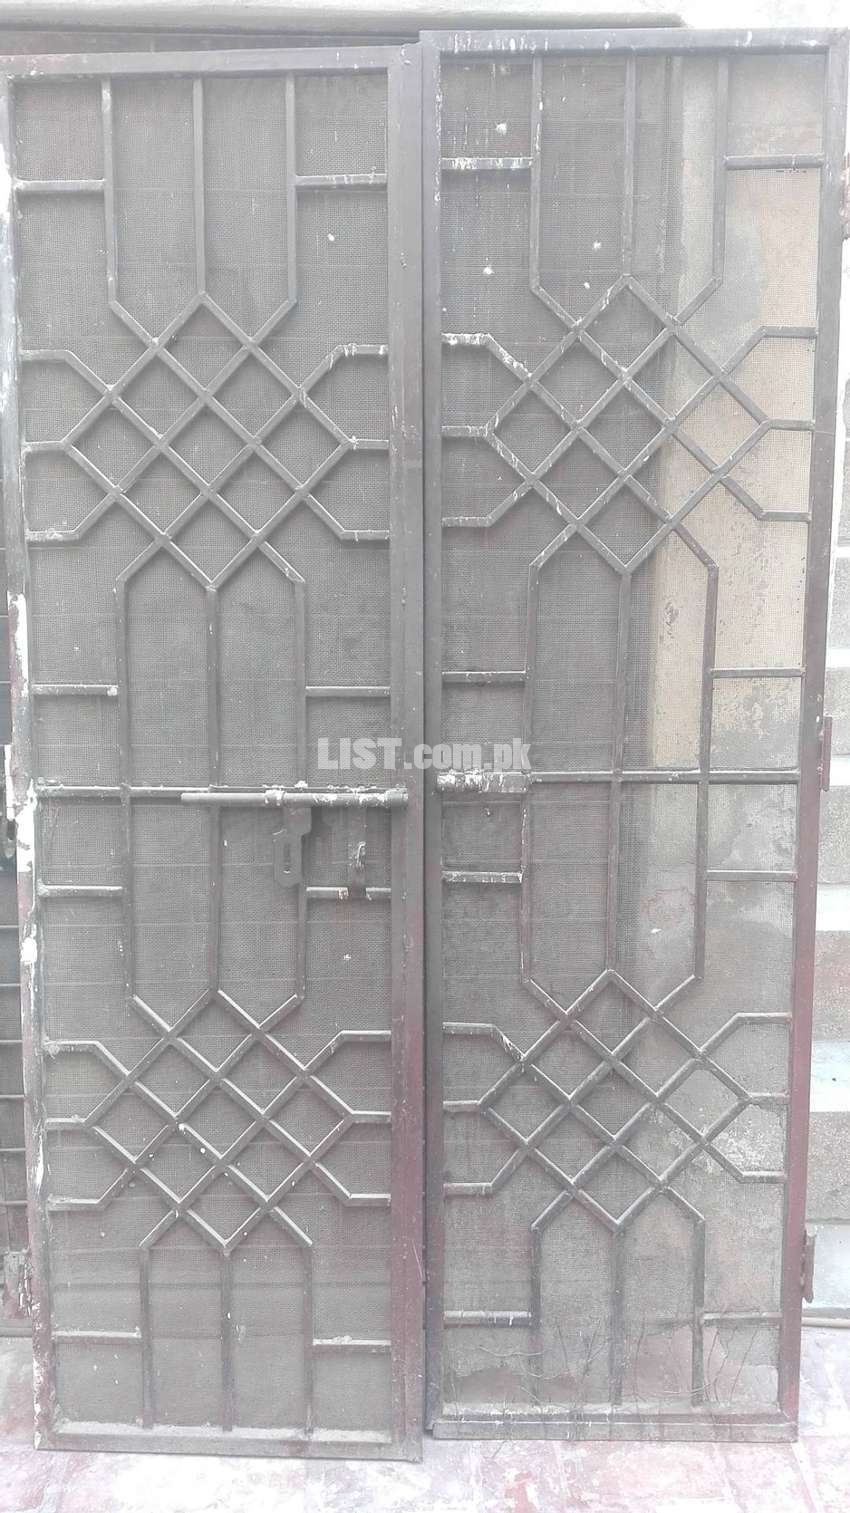 Used iron door in very reasonable price price